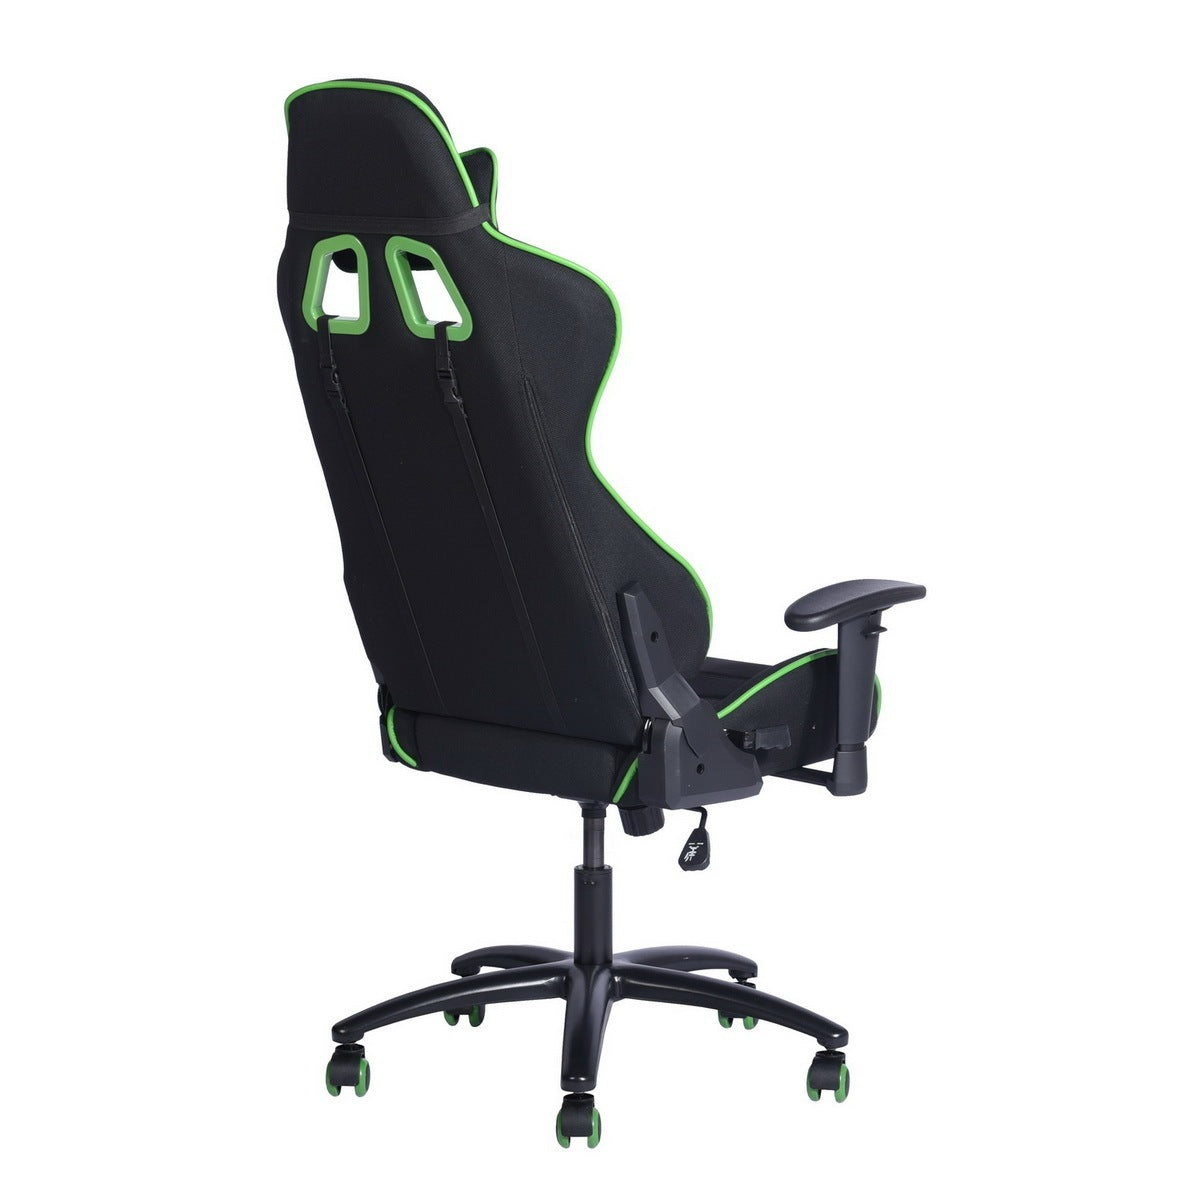 E-sport PC & Racing Game Chair (Green/Black)